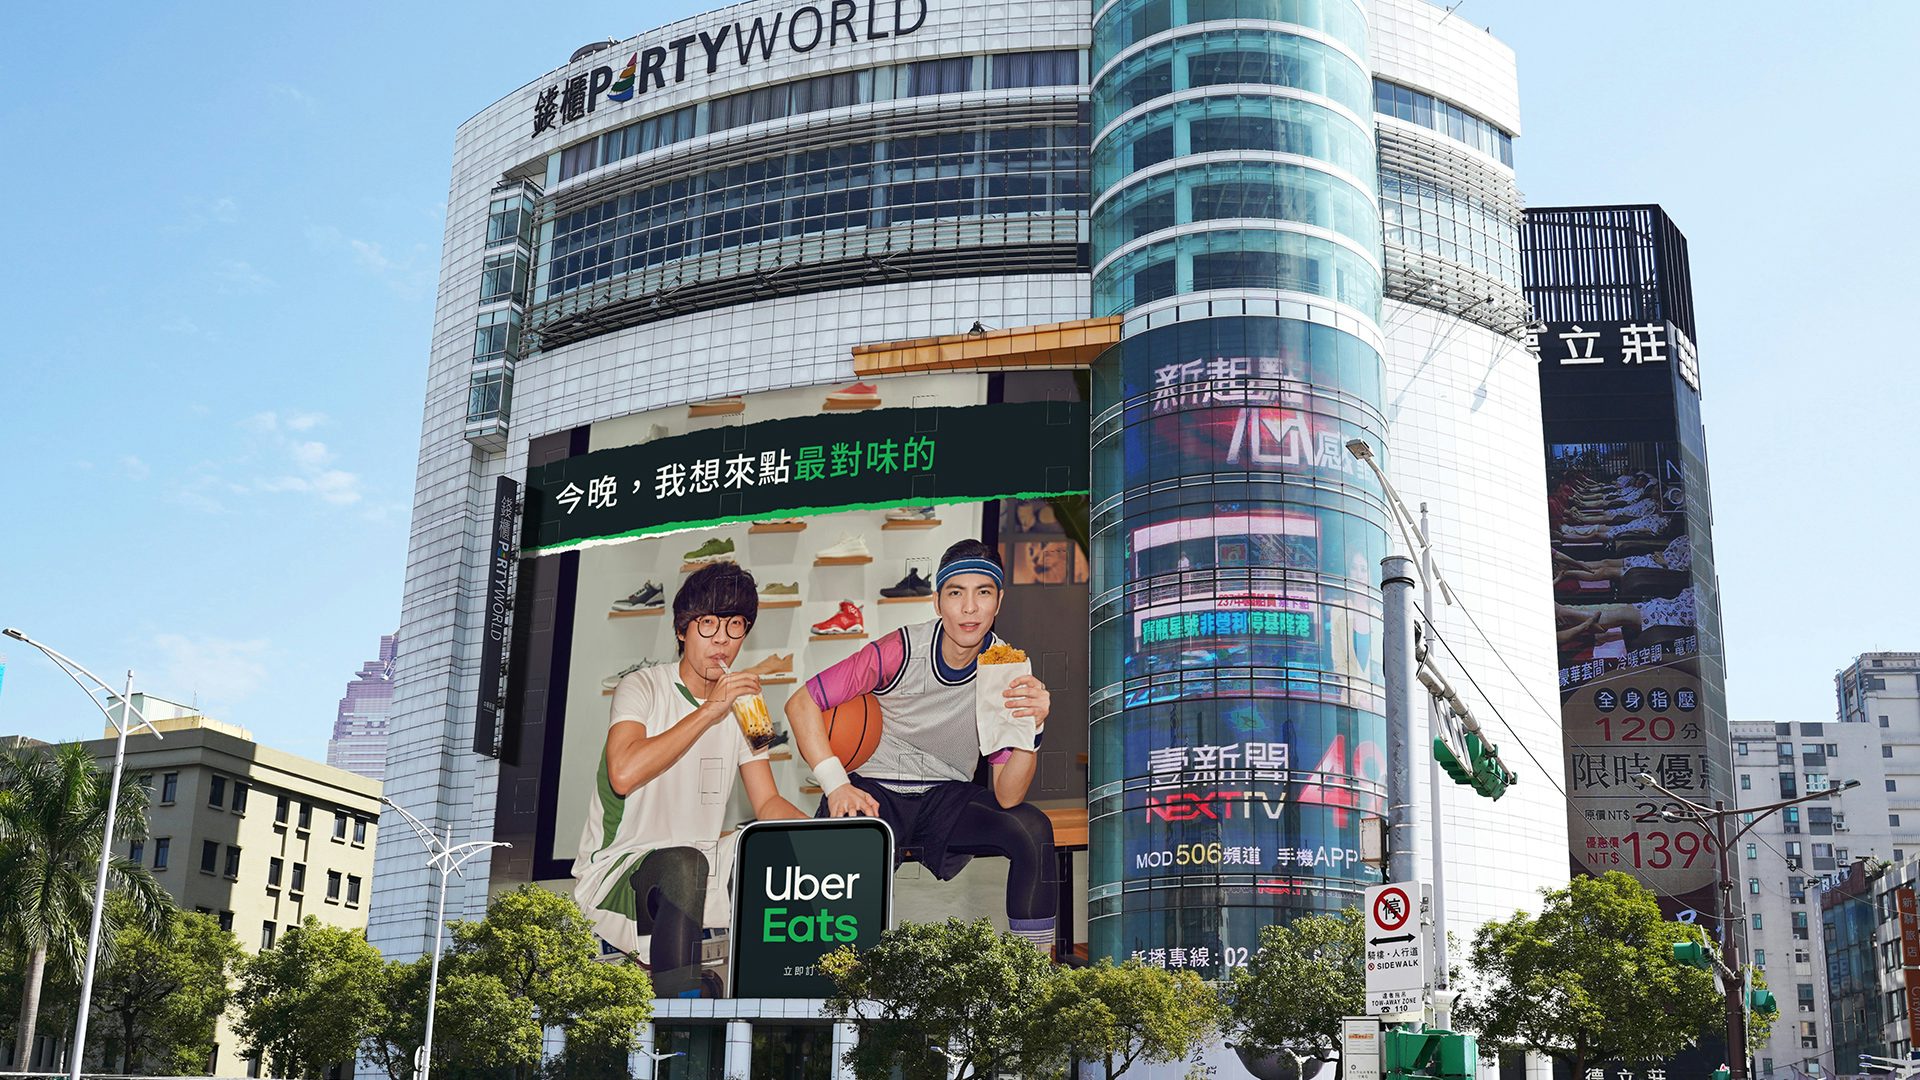 UberEats Taipei 101 Countdown